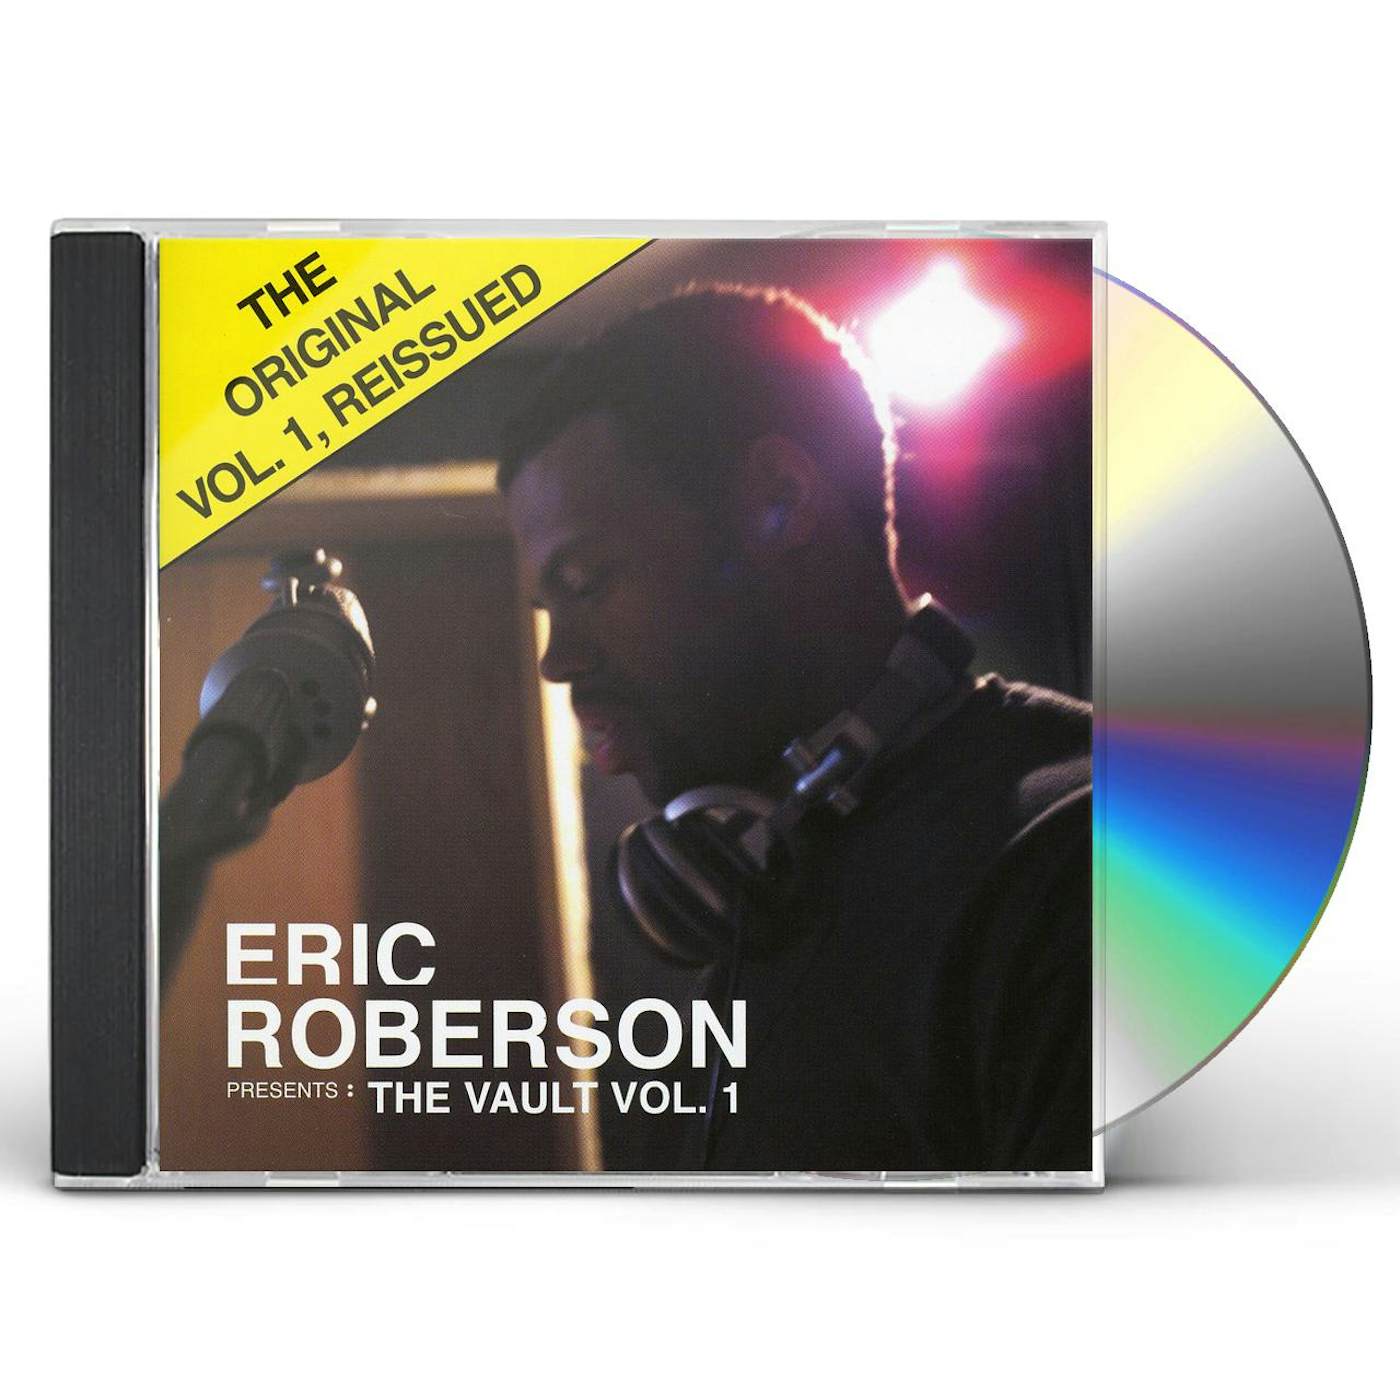 Eric Roberson PRESENTS: THE VAULT 1 CD